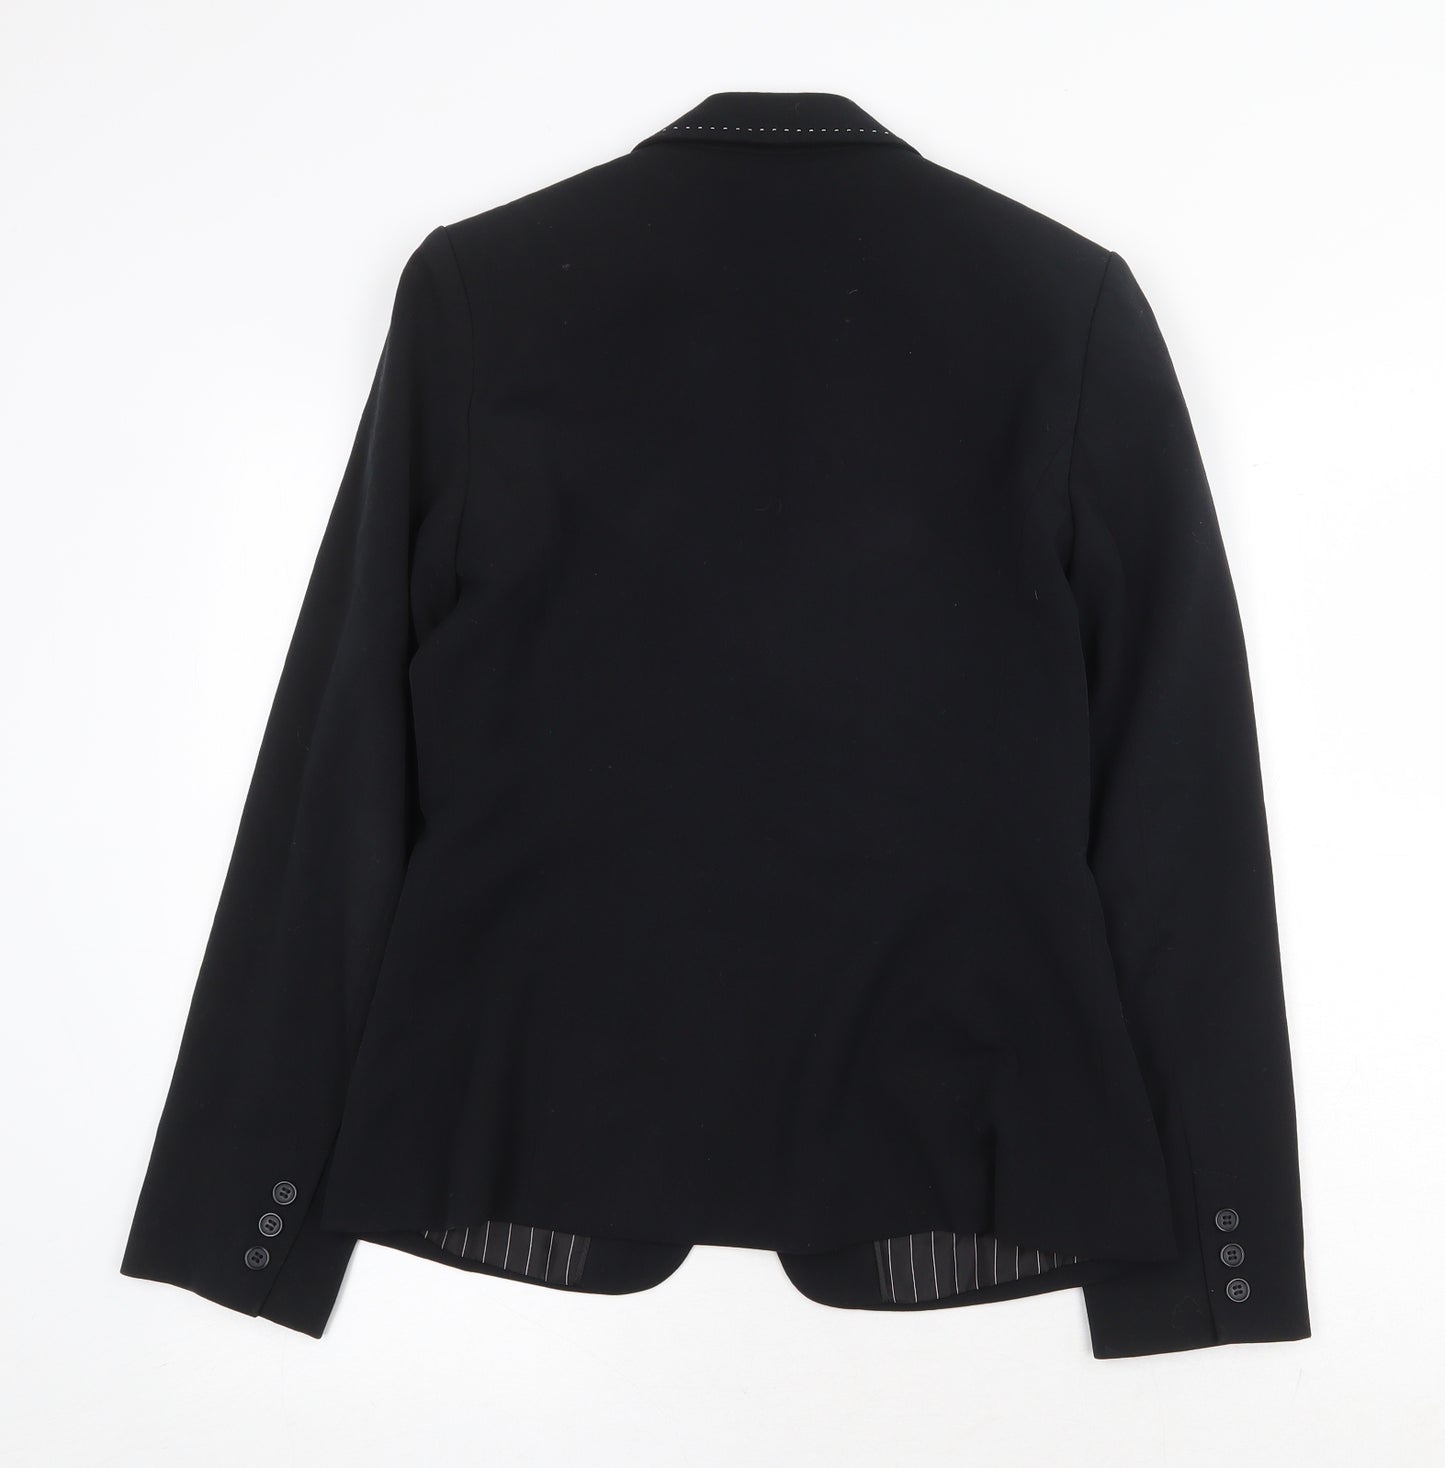 NEXT Womens Black Polyester Jacket Blazer Size 8 Button